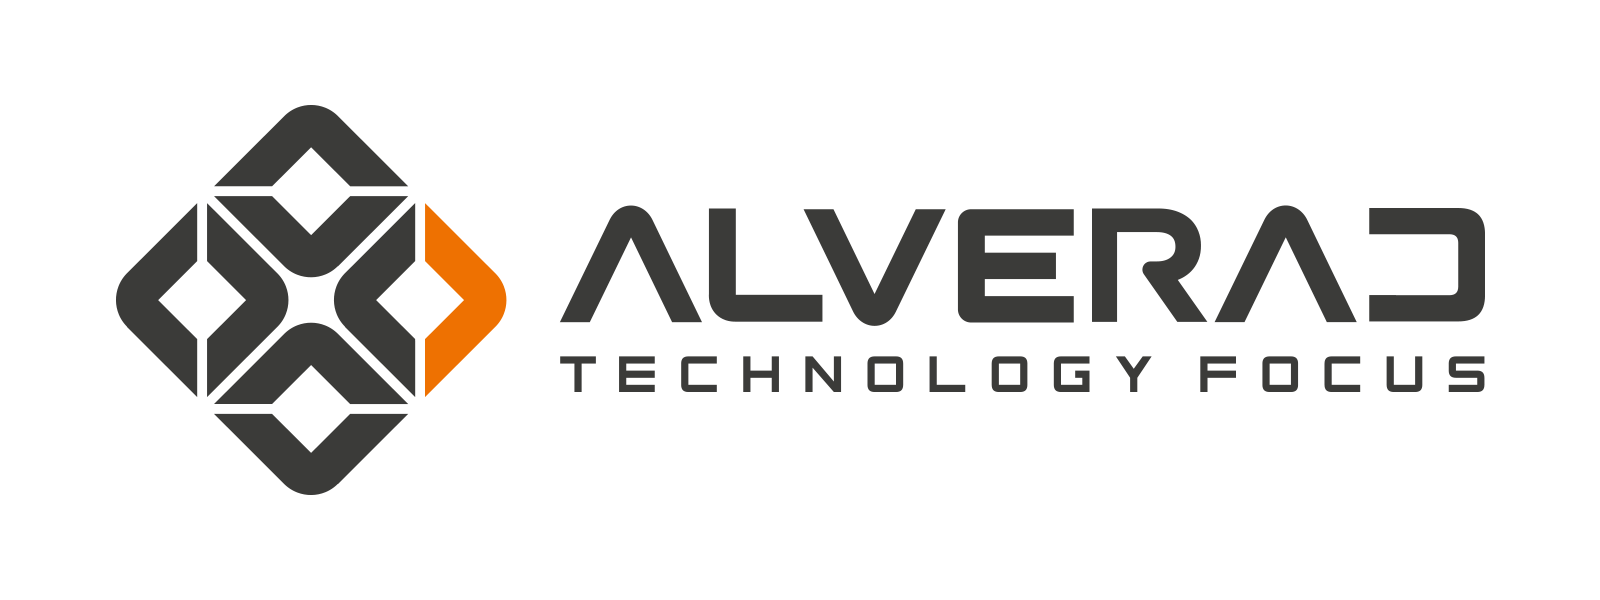 Alverad Technology Focus Kft